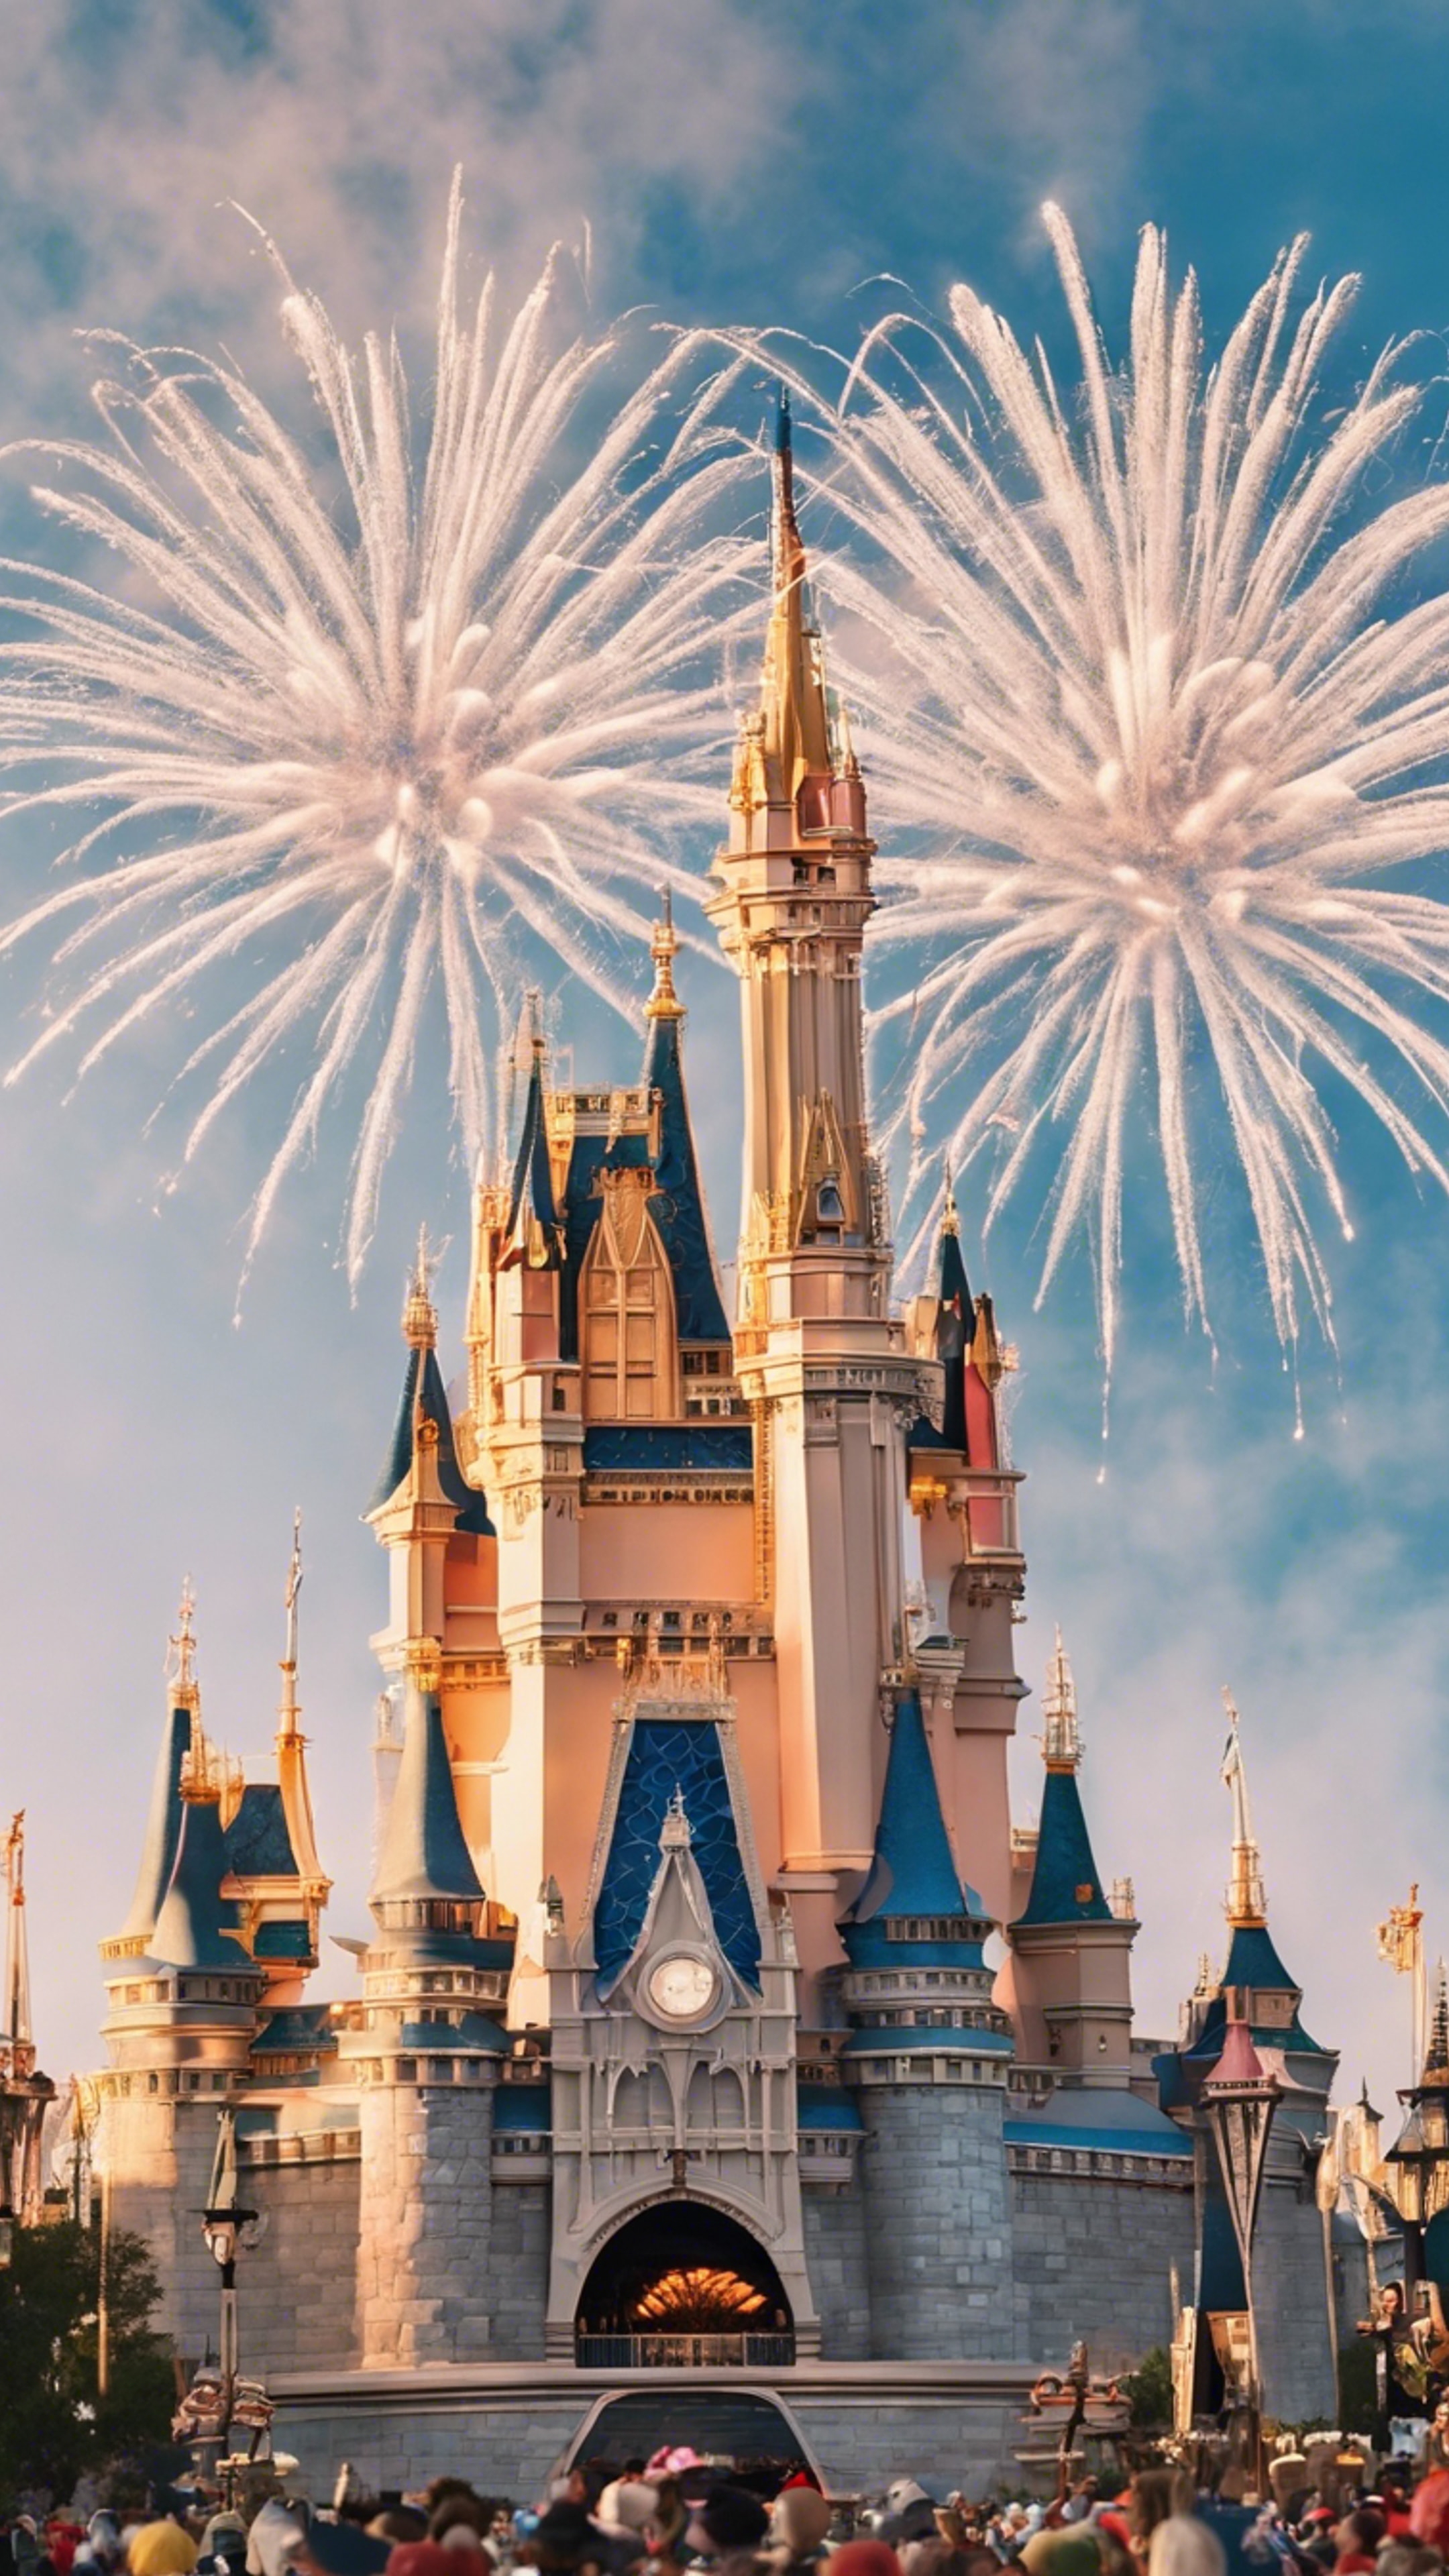 A dazzling firework display over Disney's Magic Kingdom, as seen from the Main Street U.S.A. Tapeta na zeď[06ea505dccb744c89f0a]